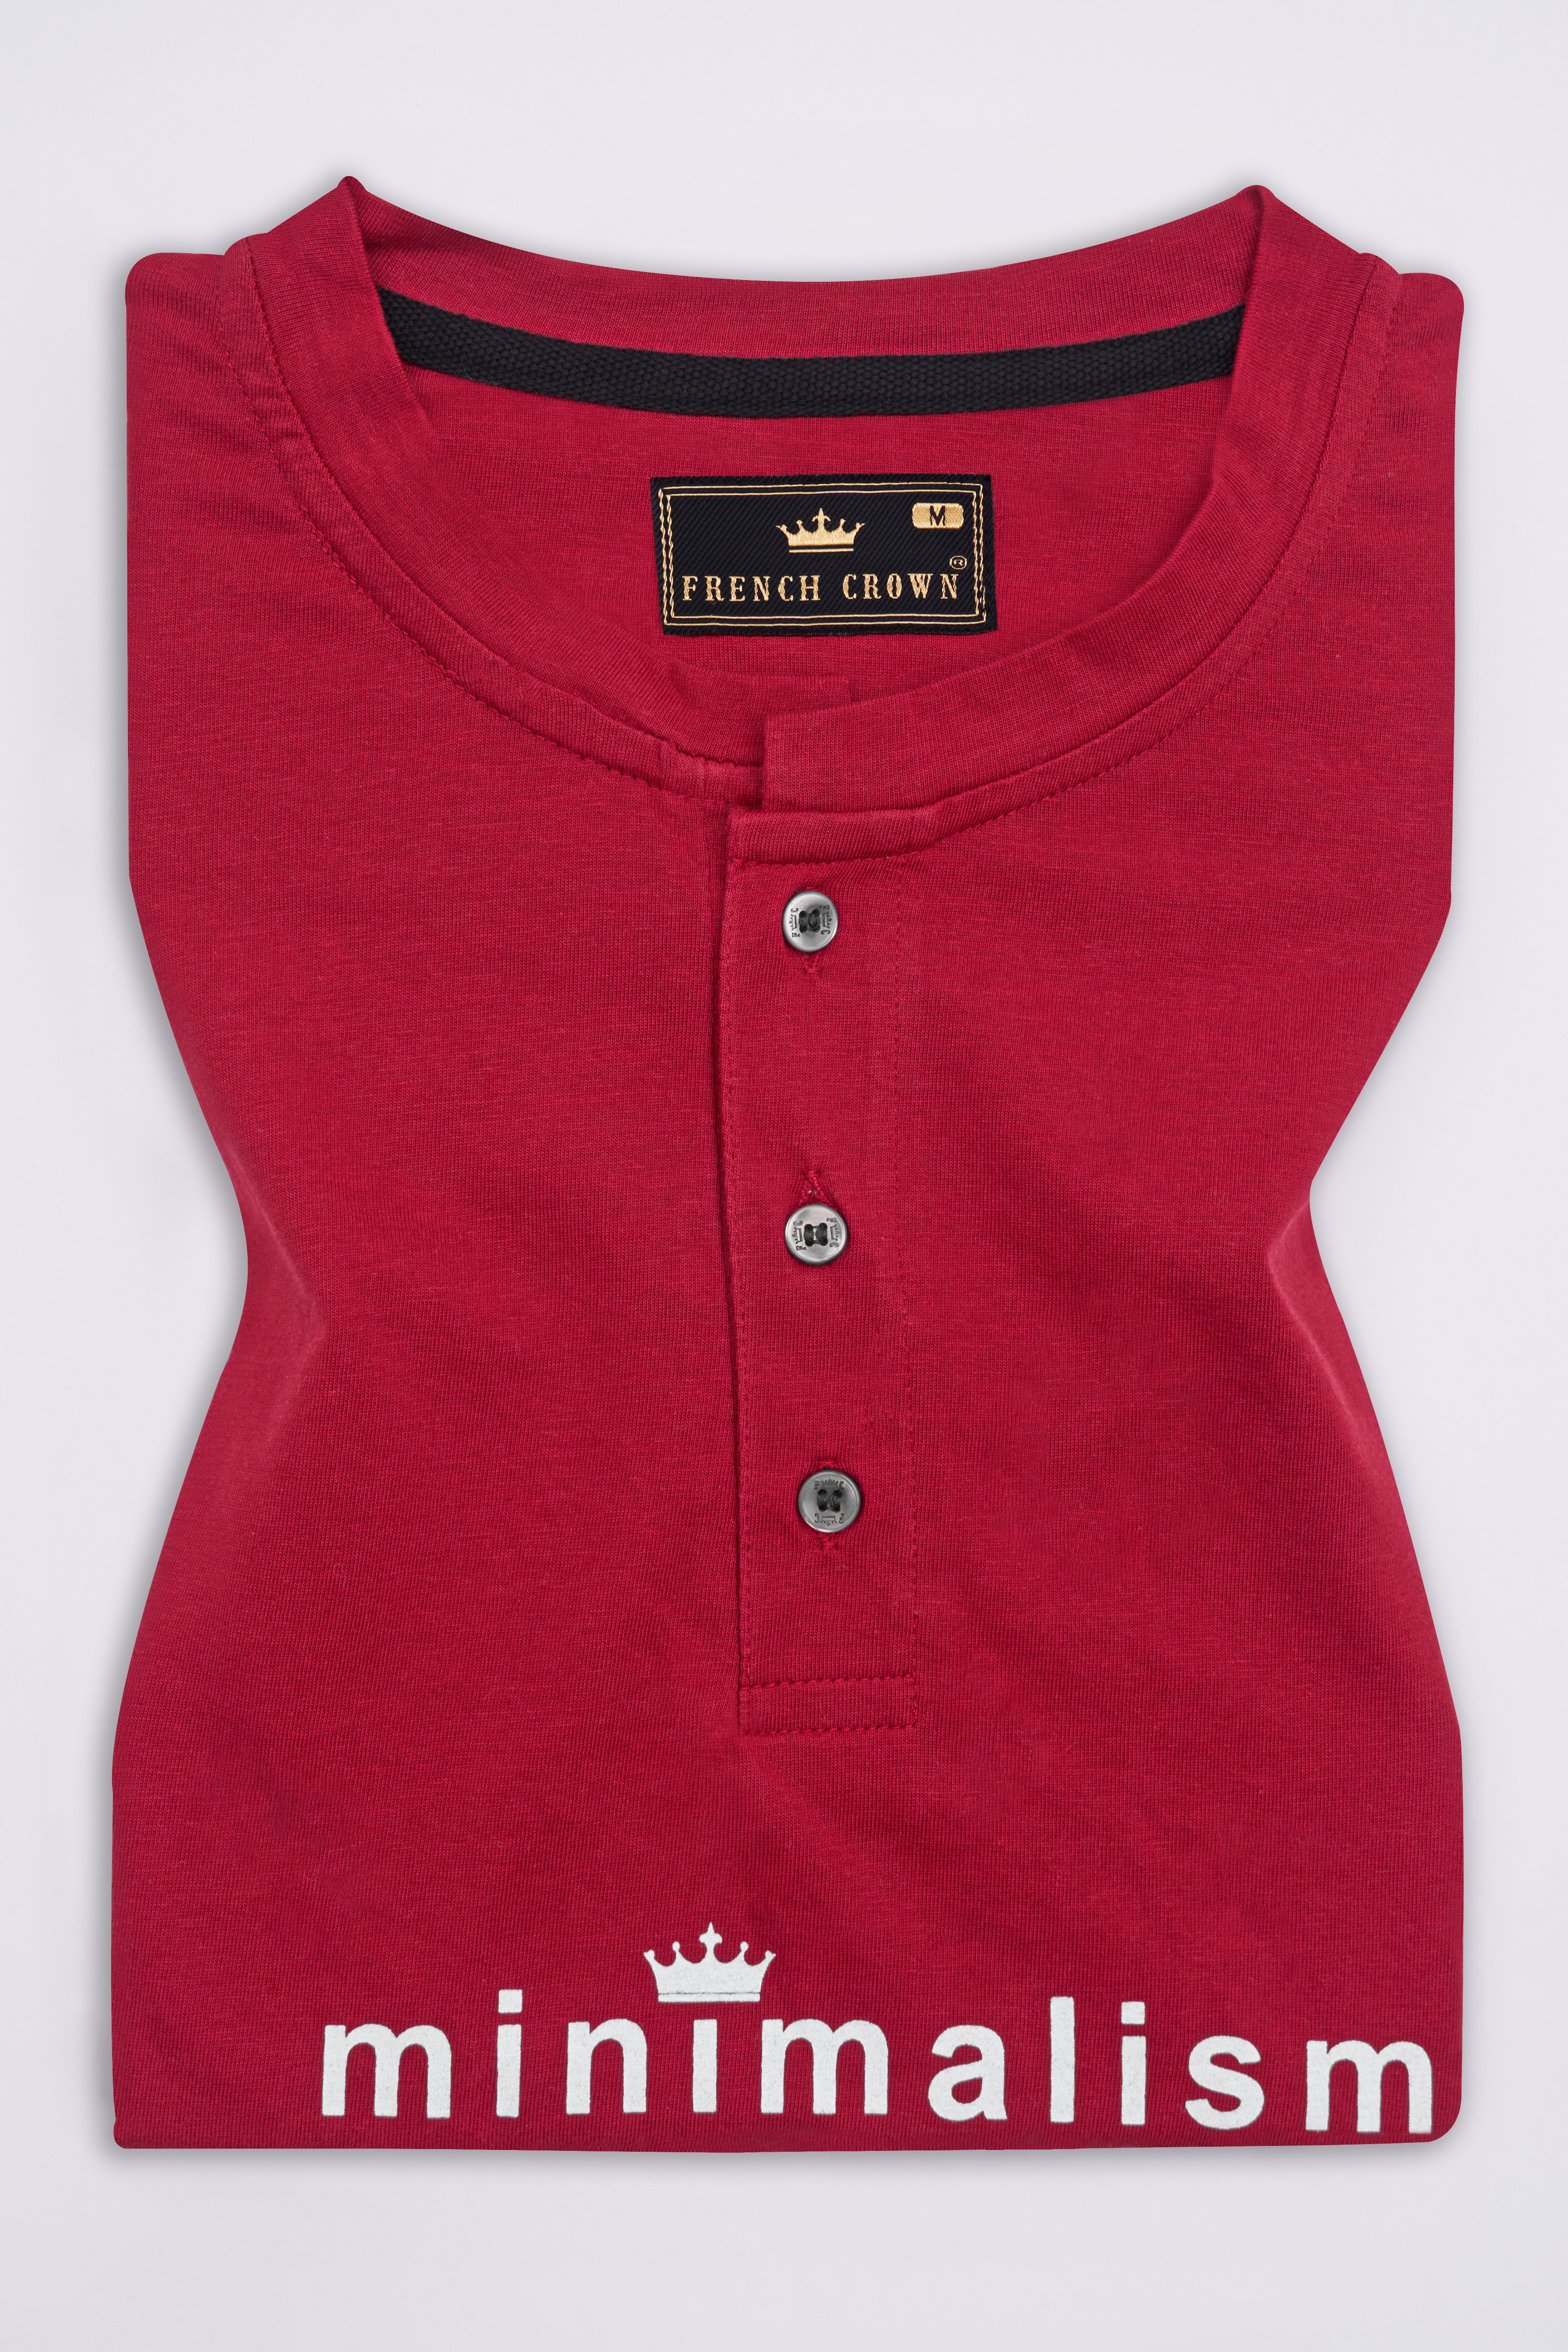 Monarch Red Premium Cotton Round Neck T-Shirt TS918-S, TS918-M, TS918-L, TS918-XL, TS918-XXL